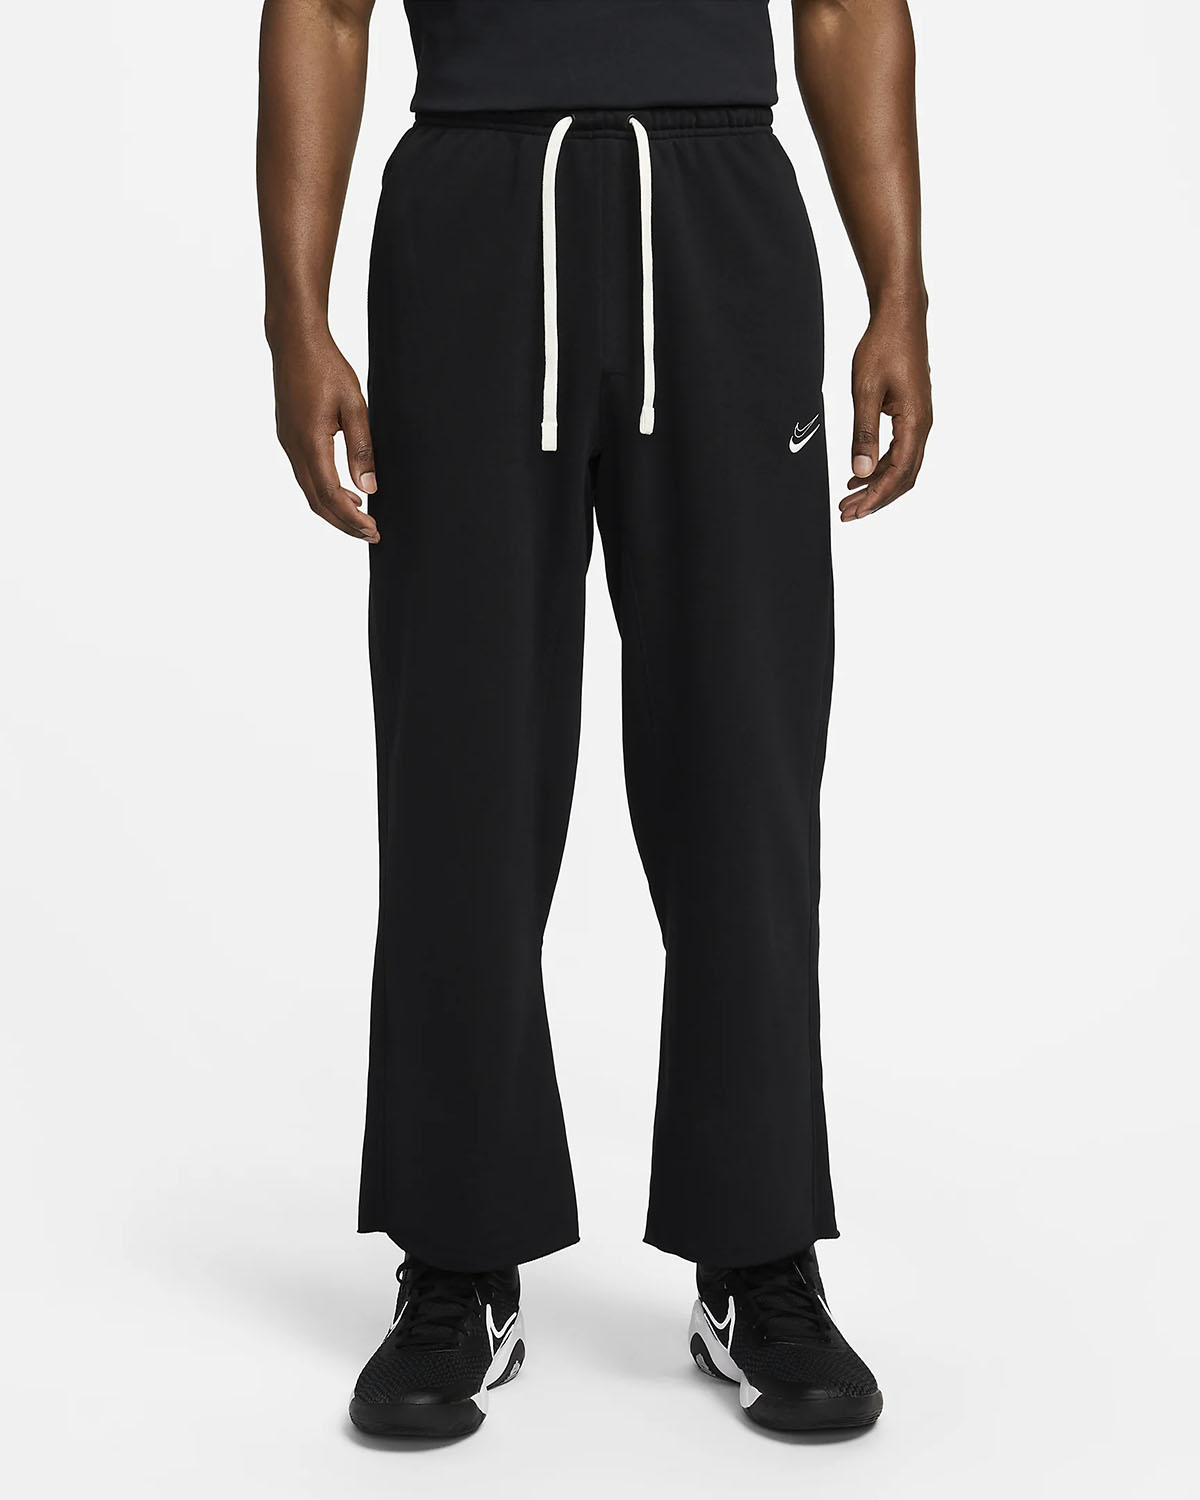 Nike KD 17 Basketball Pants Black